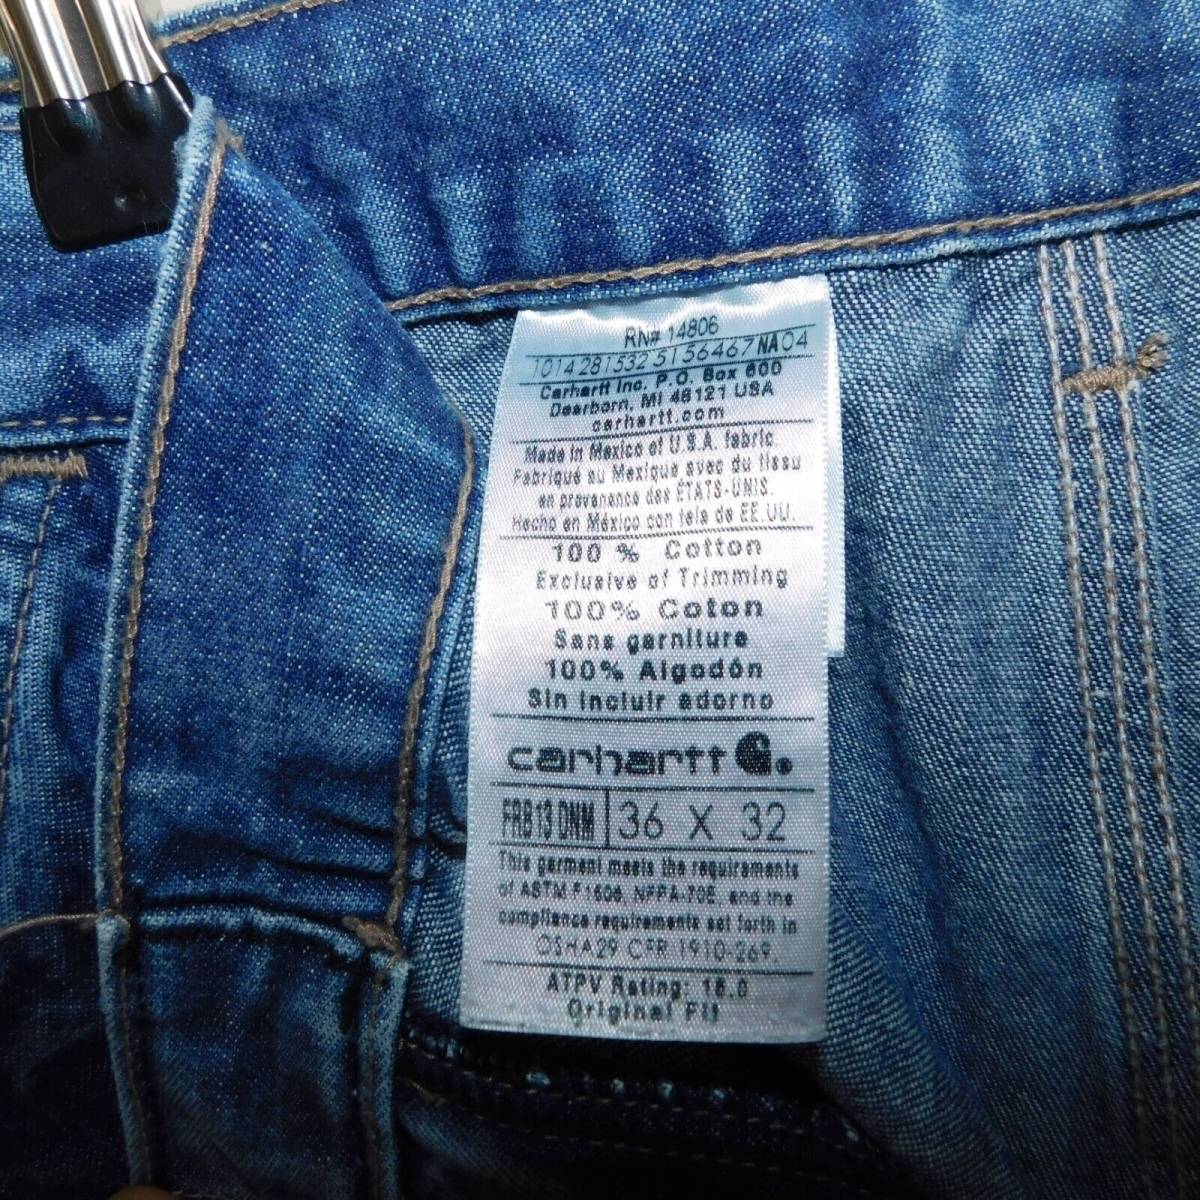 Carhartt FR NFPA 2112 Workwear Pants Pocket Denim FRB 13 Blue Jeans Size 36x32 海外 即決 2